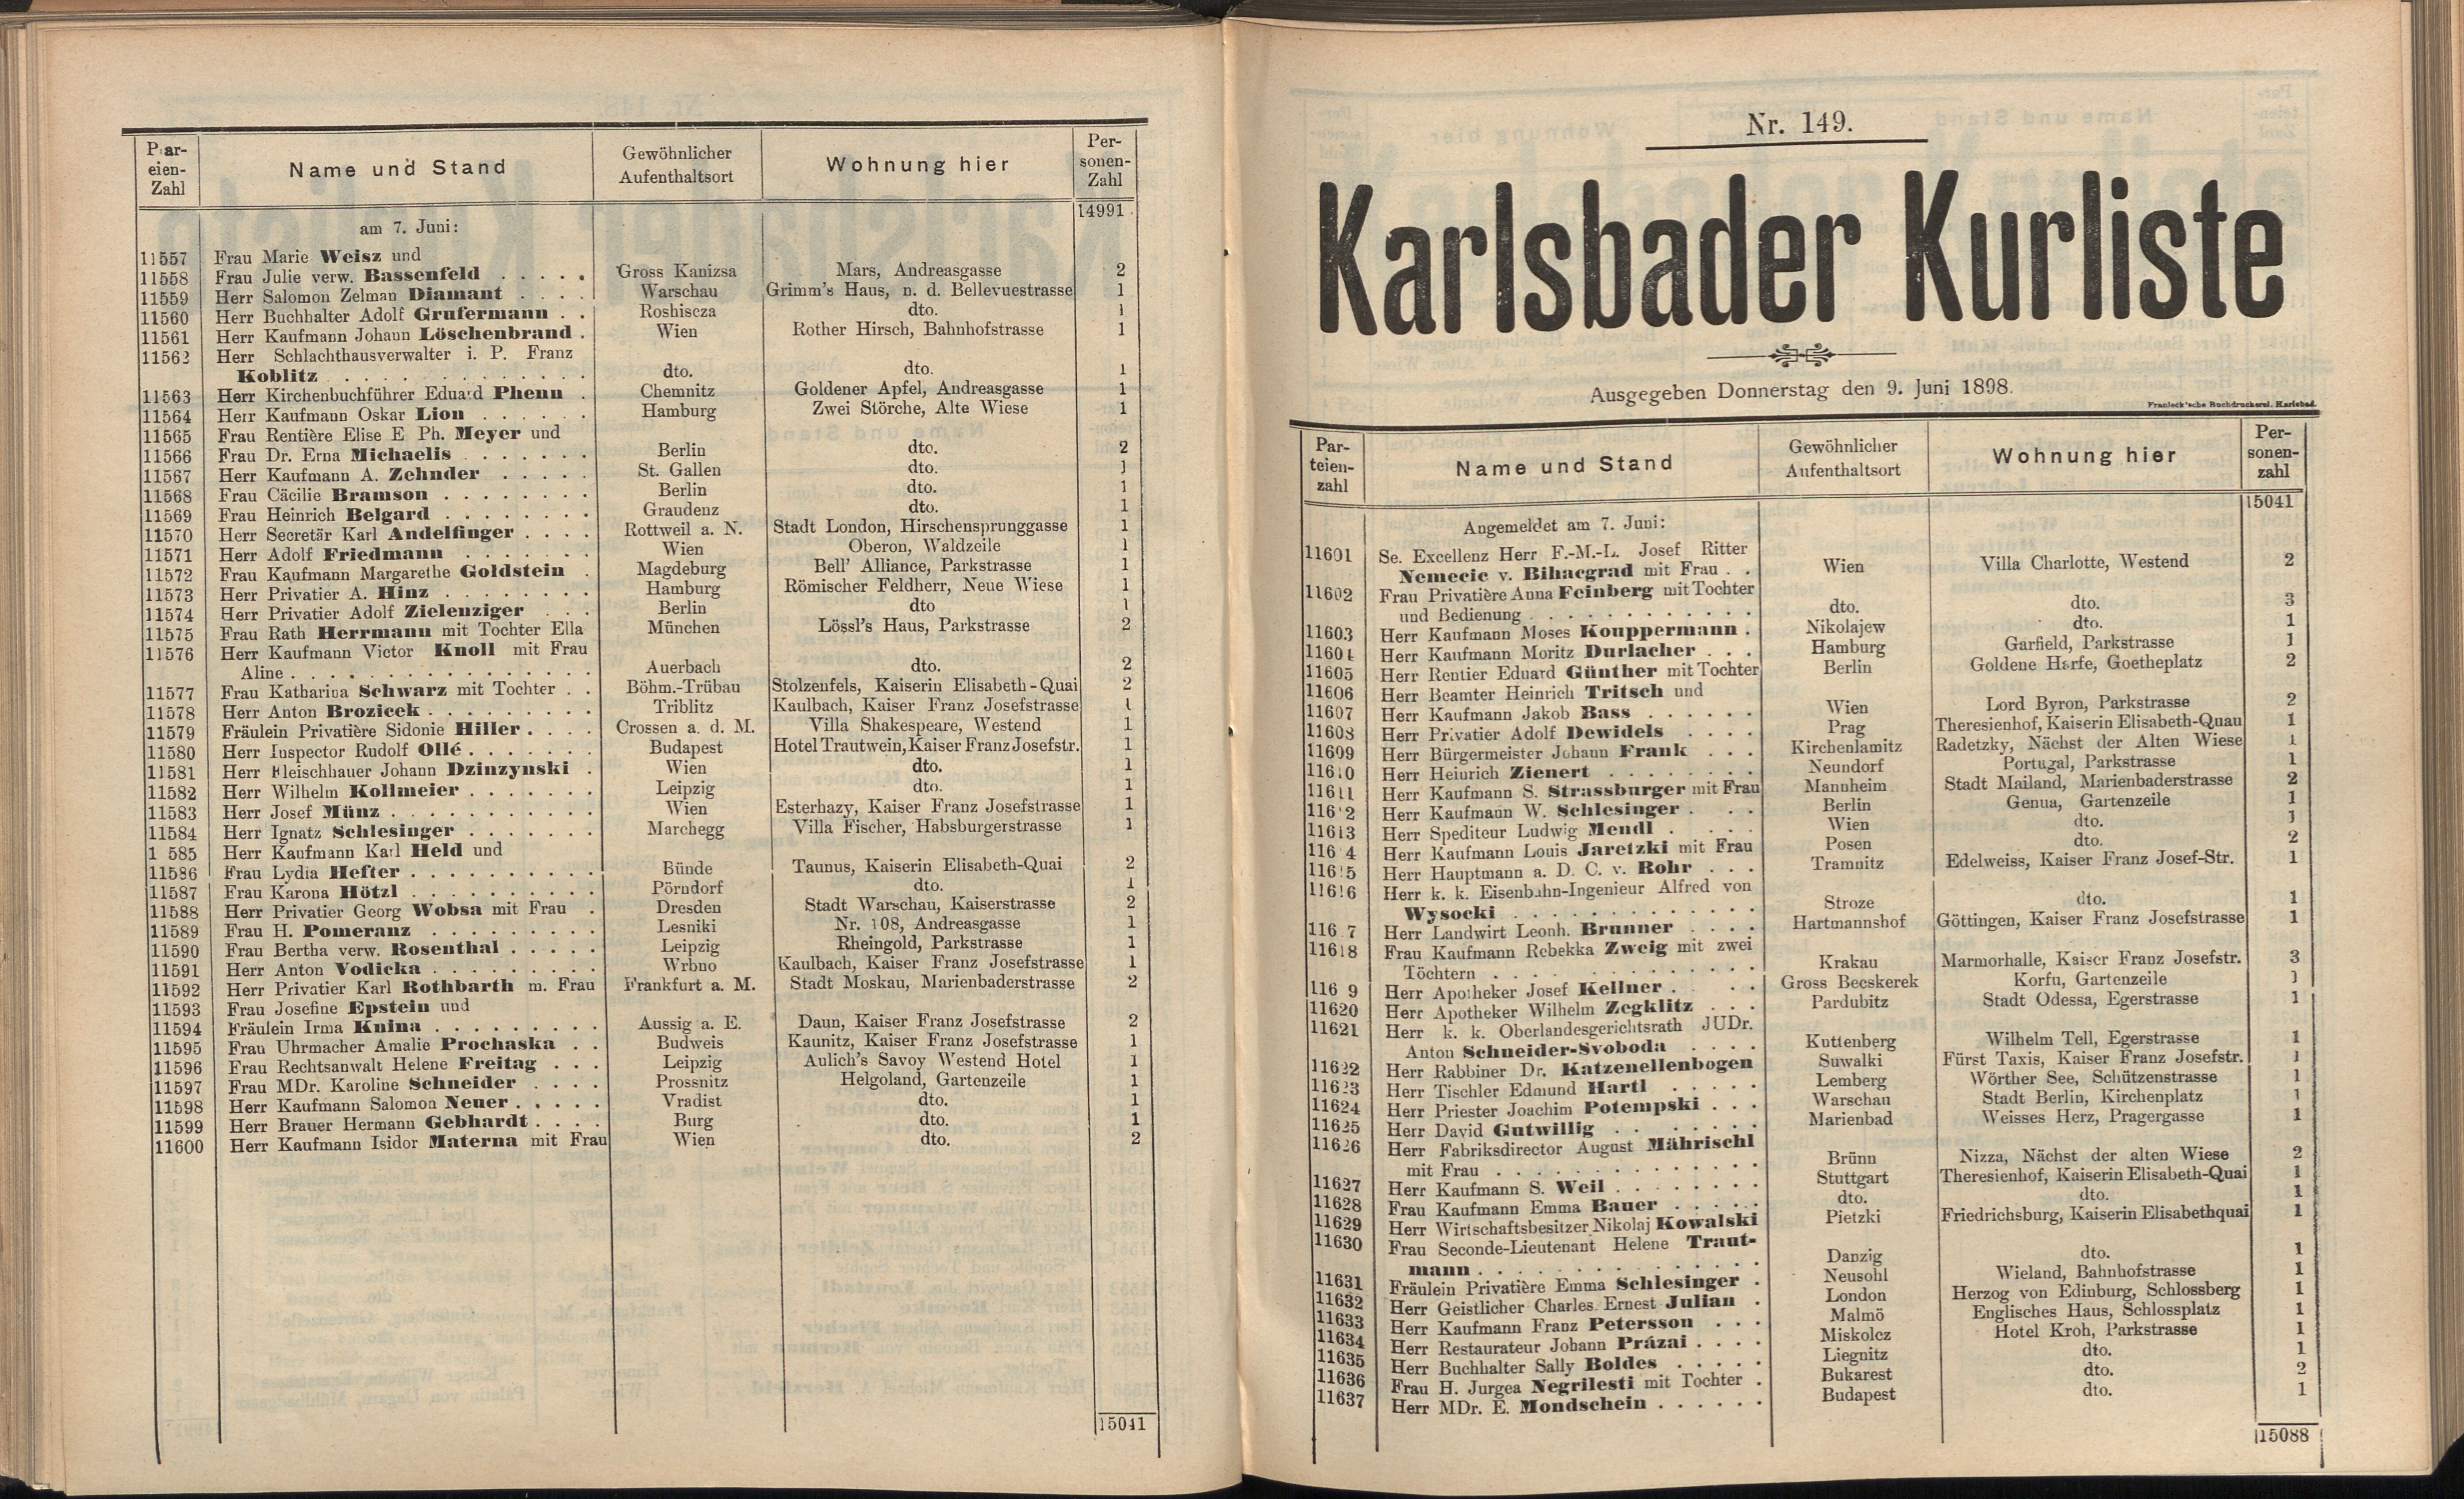 165. soap-kv_knihovna_karlsbader-kurliste-1898_1660